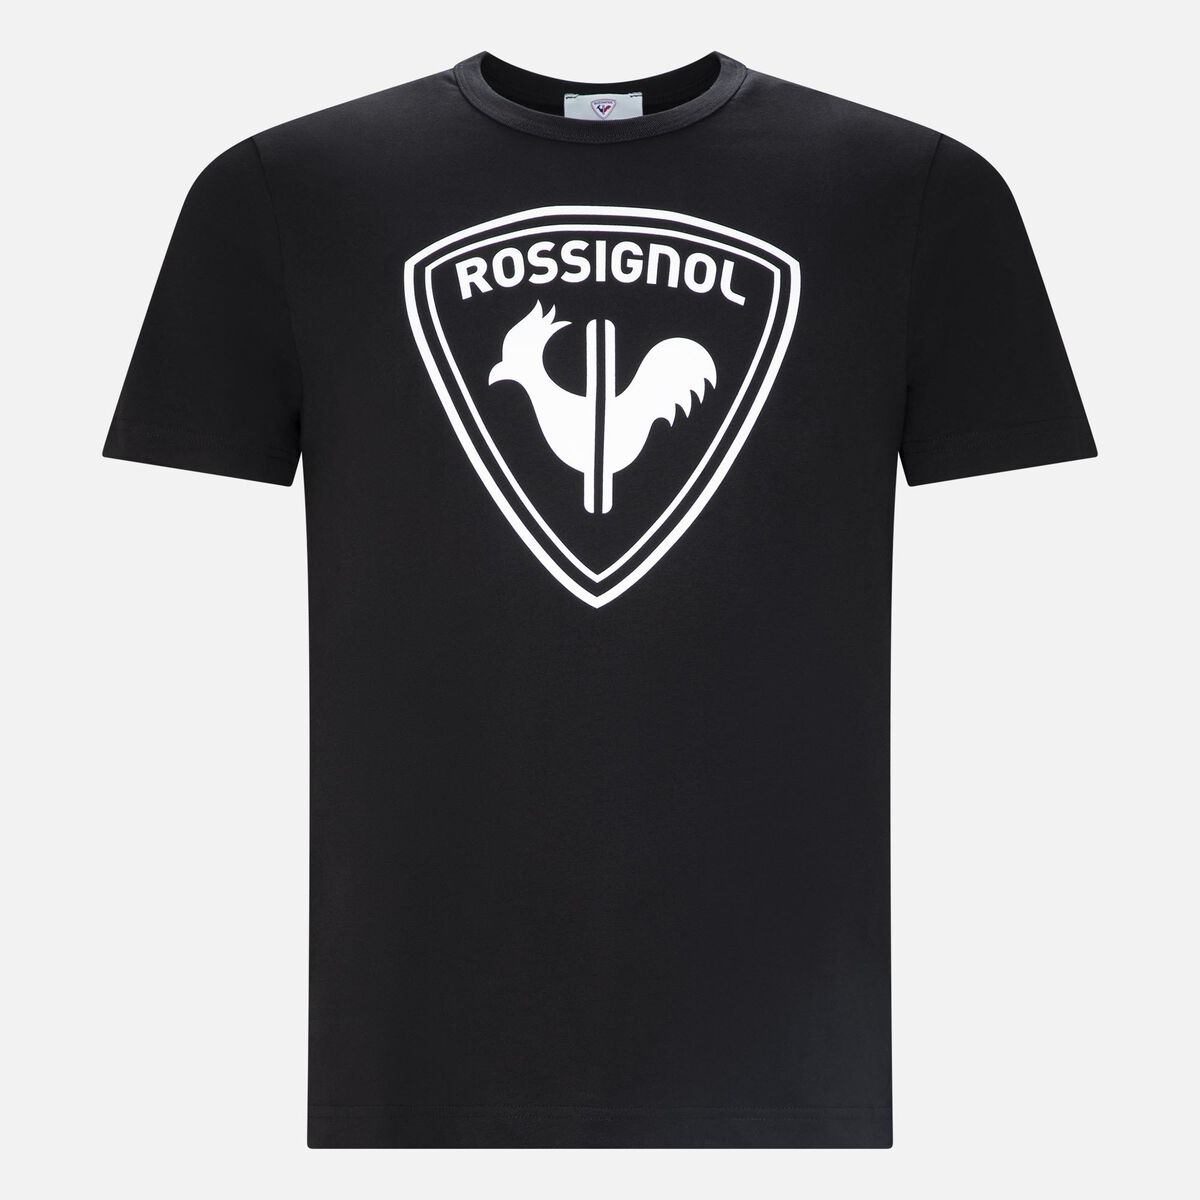 Rossignol Logo Rossignol Herren-T-Shirt black